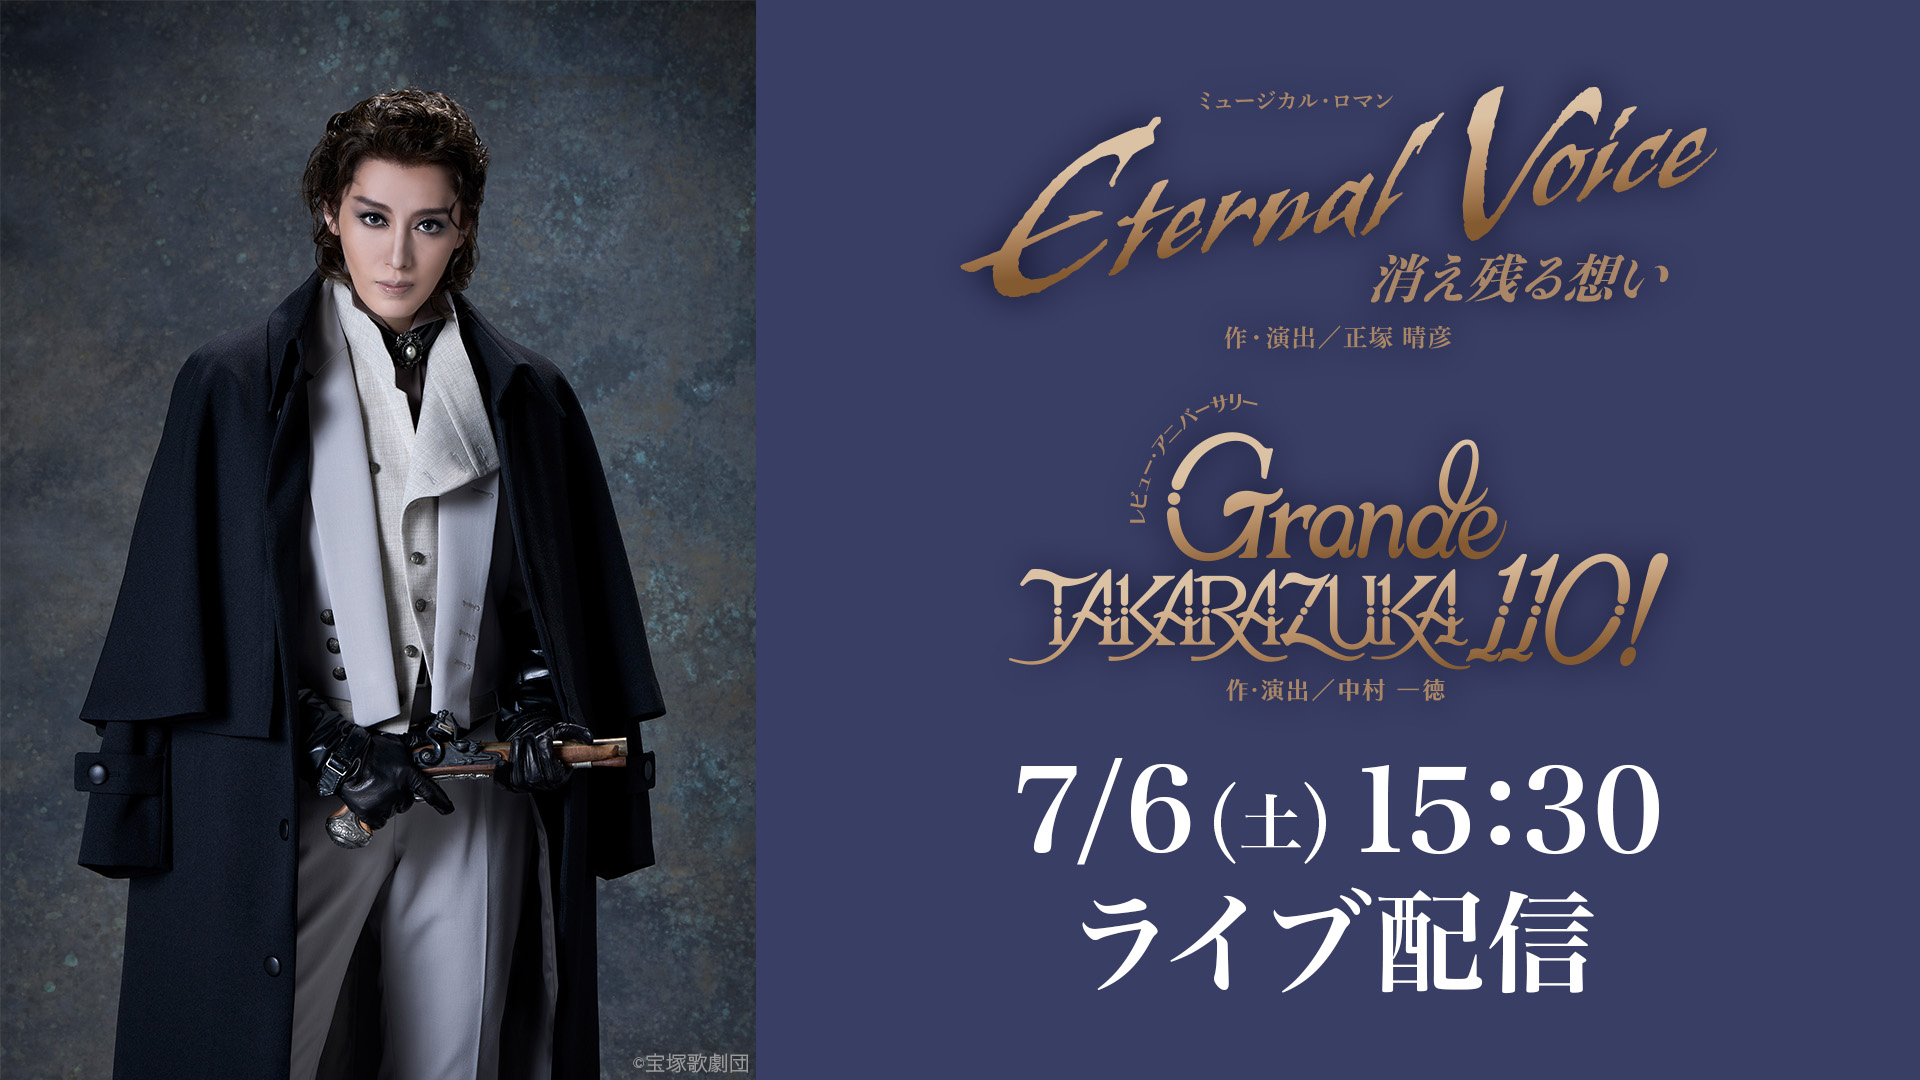 月組 東京宝塚劇場公演『Eternal Voice 消え残る想い』『Grande TAKARAZUKA 110!』LIVE配信